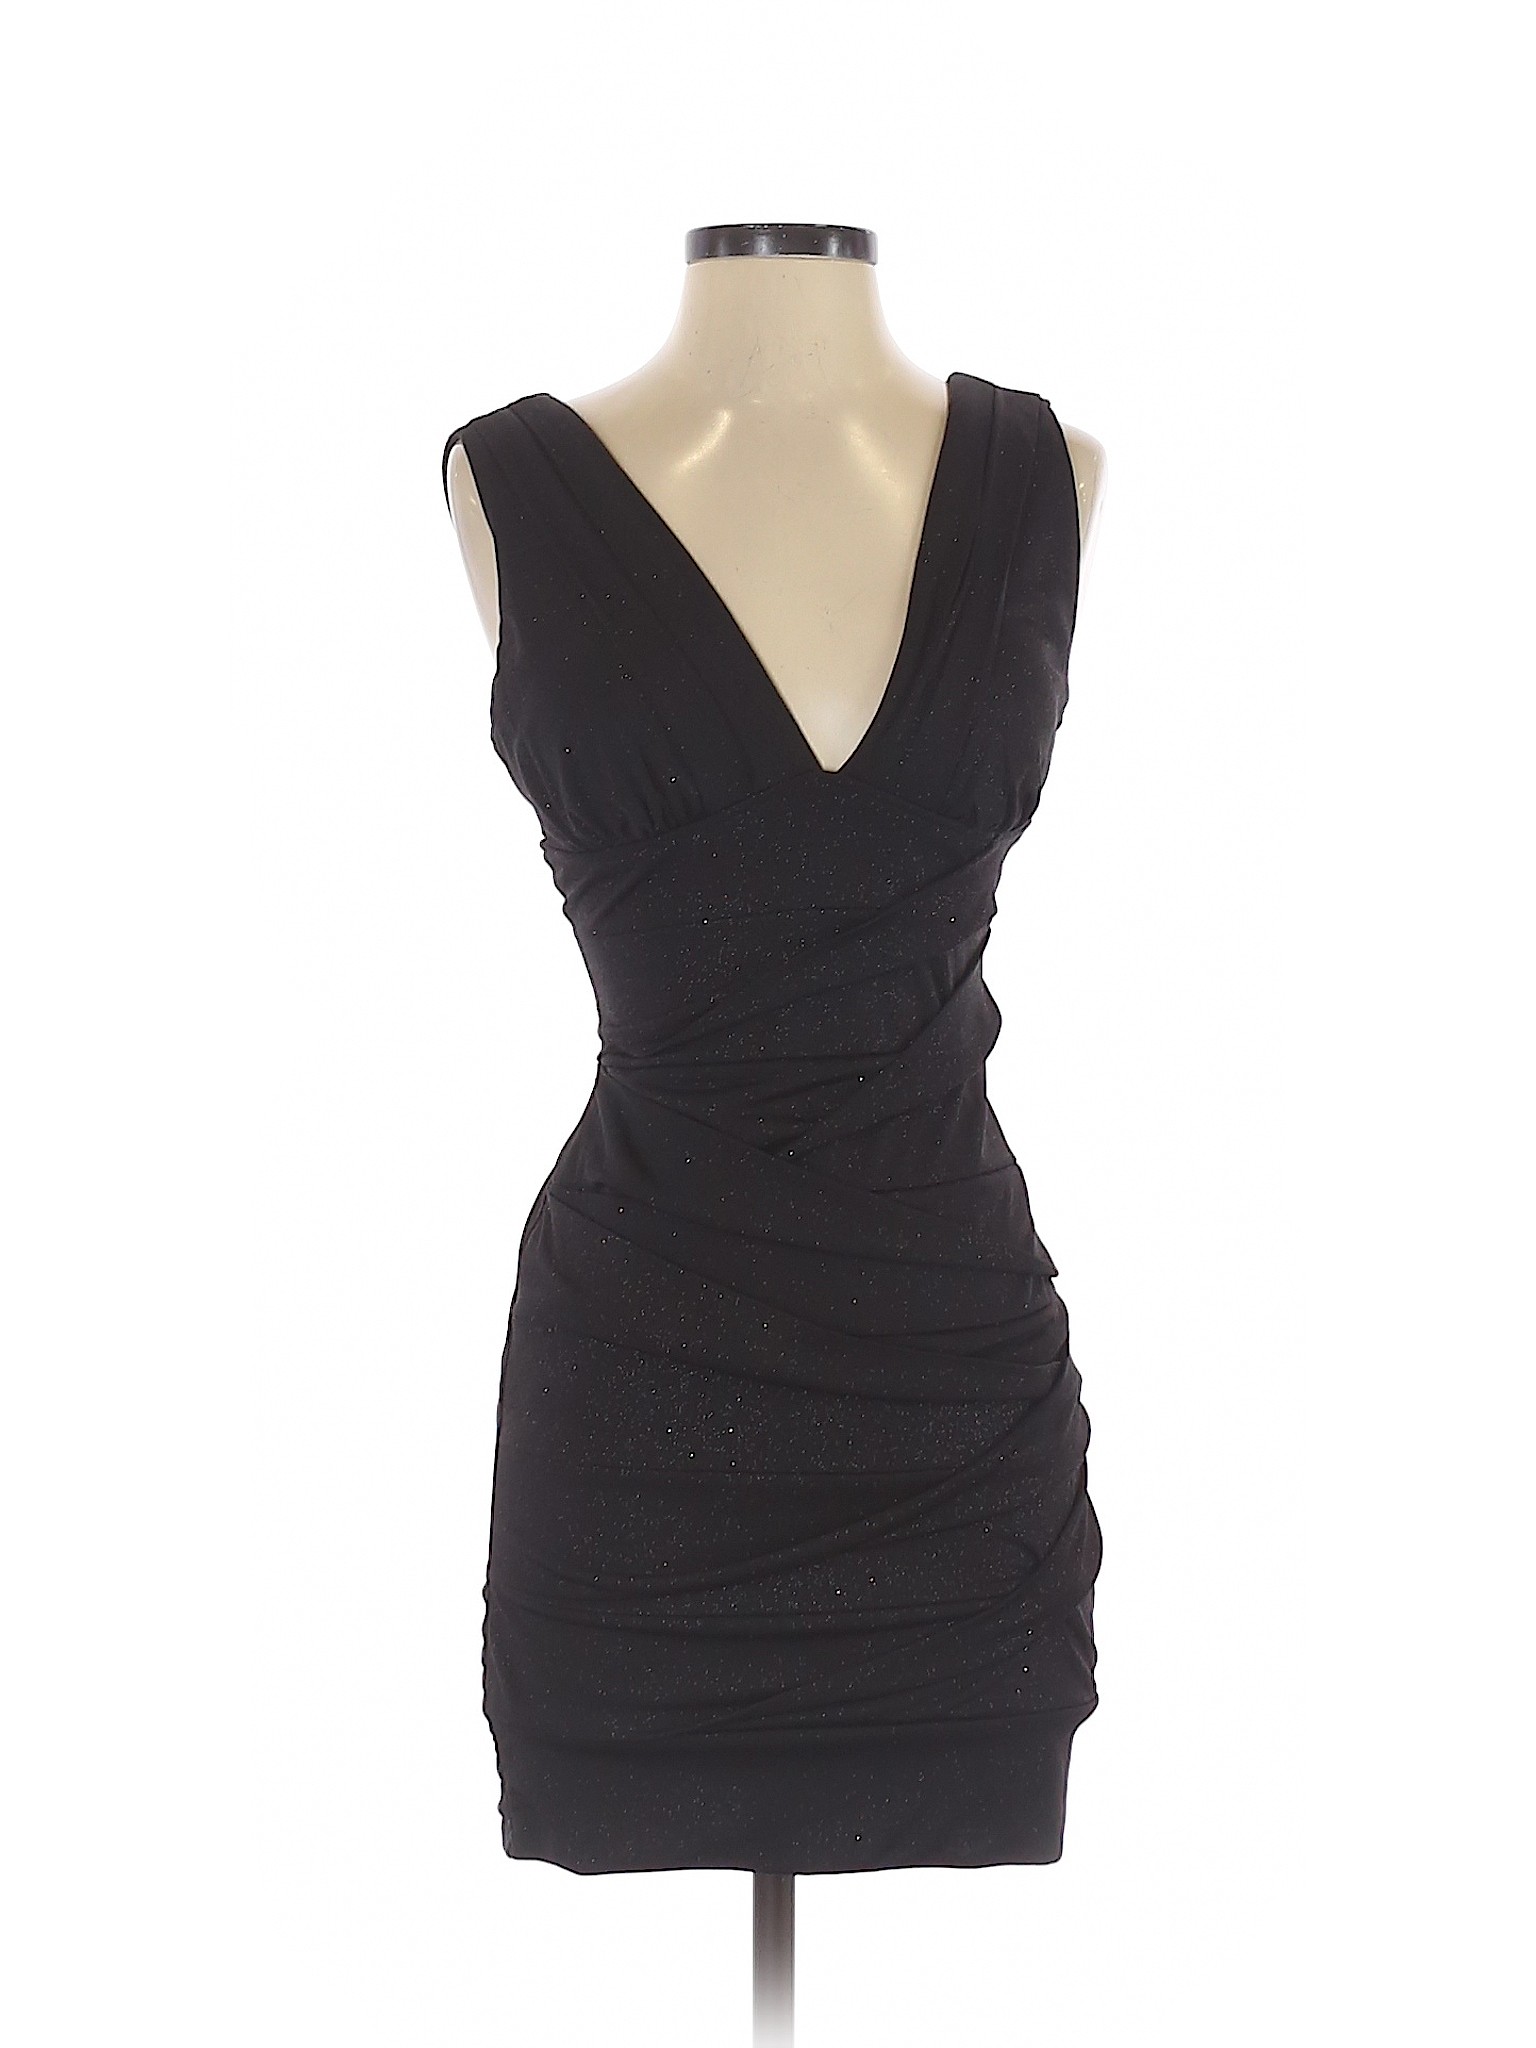 Body Central Women Black Cocktail Dress S | eBay